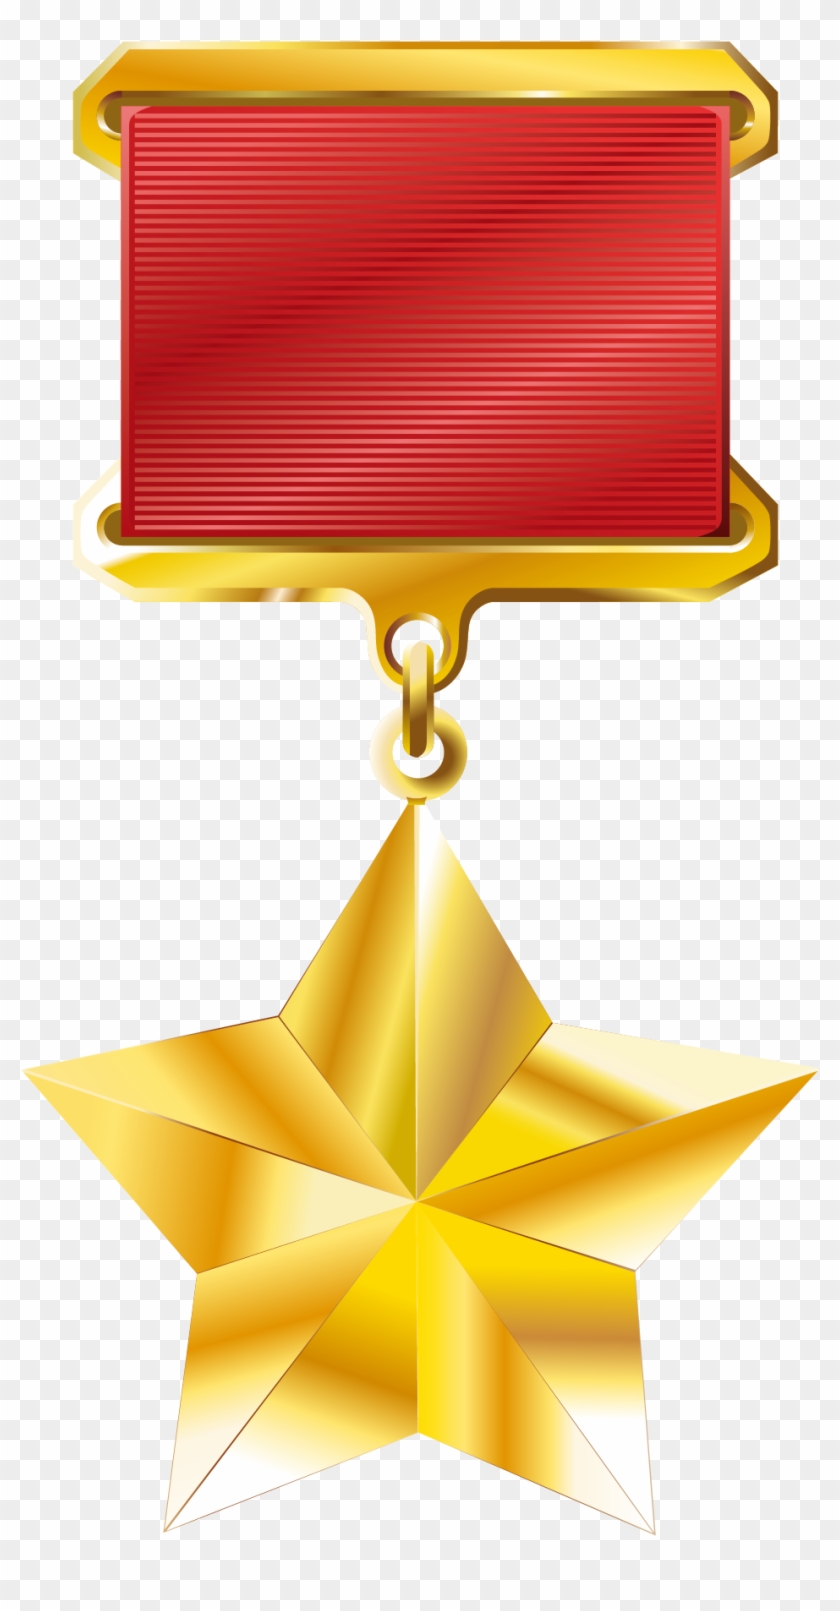 Order Of The Patriotic War Medal Clip Art - Order Of The Patriotic War Medal Clip Art #480185